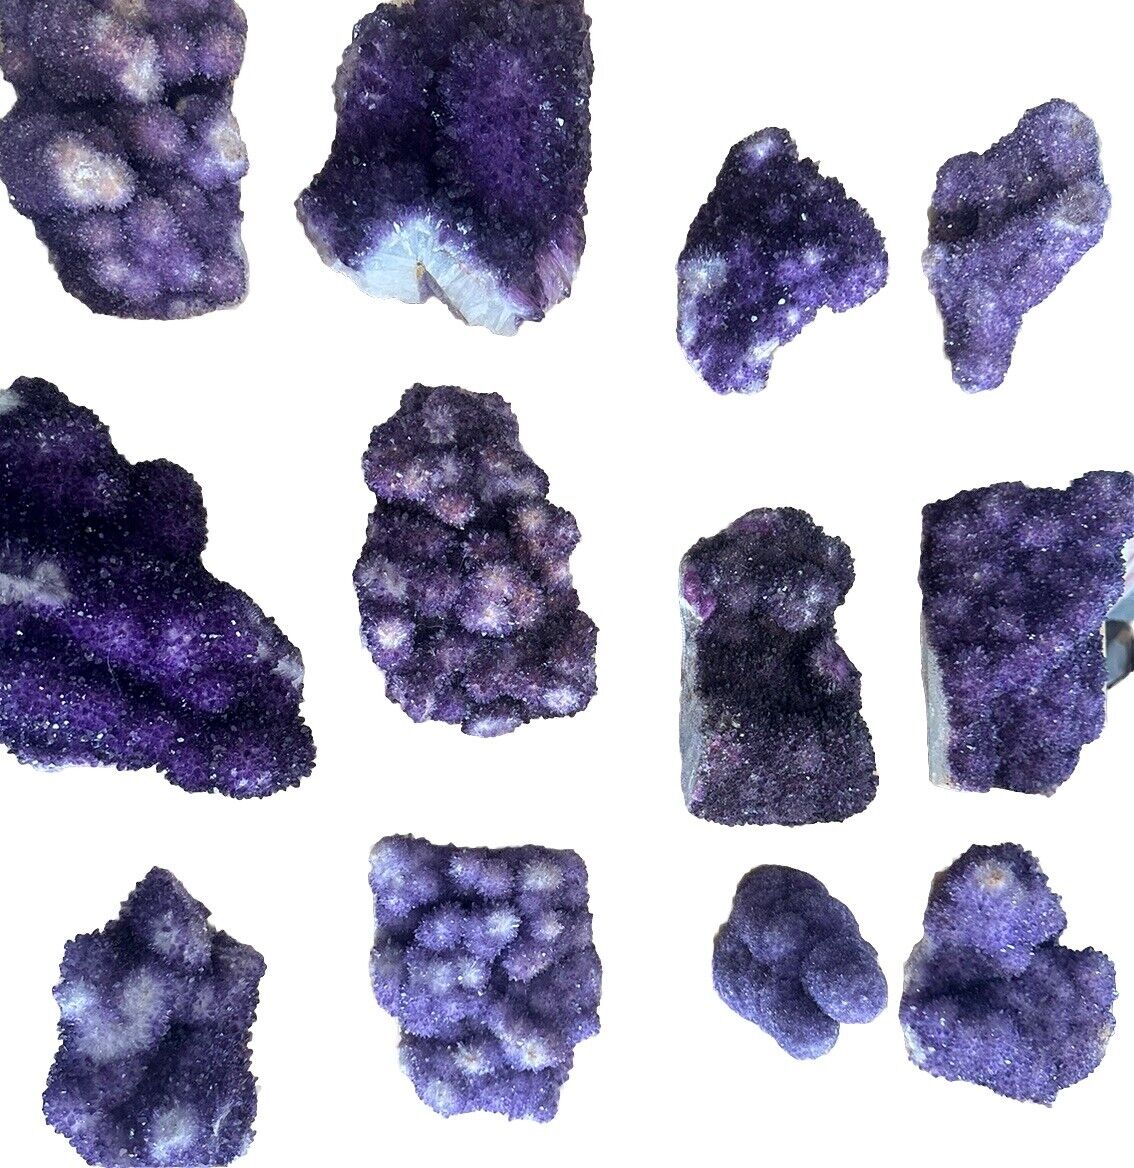 30+ Lbs Amethyst Crystal Specimens